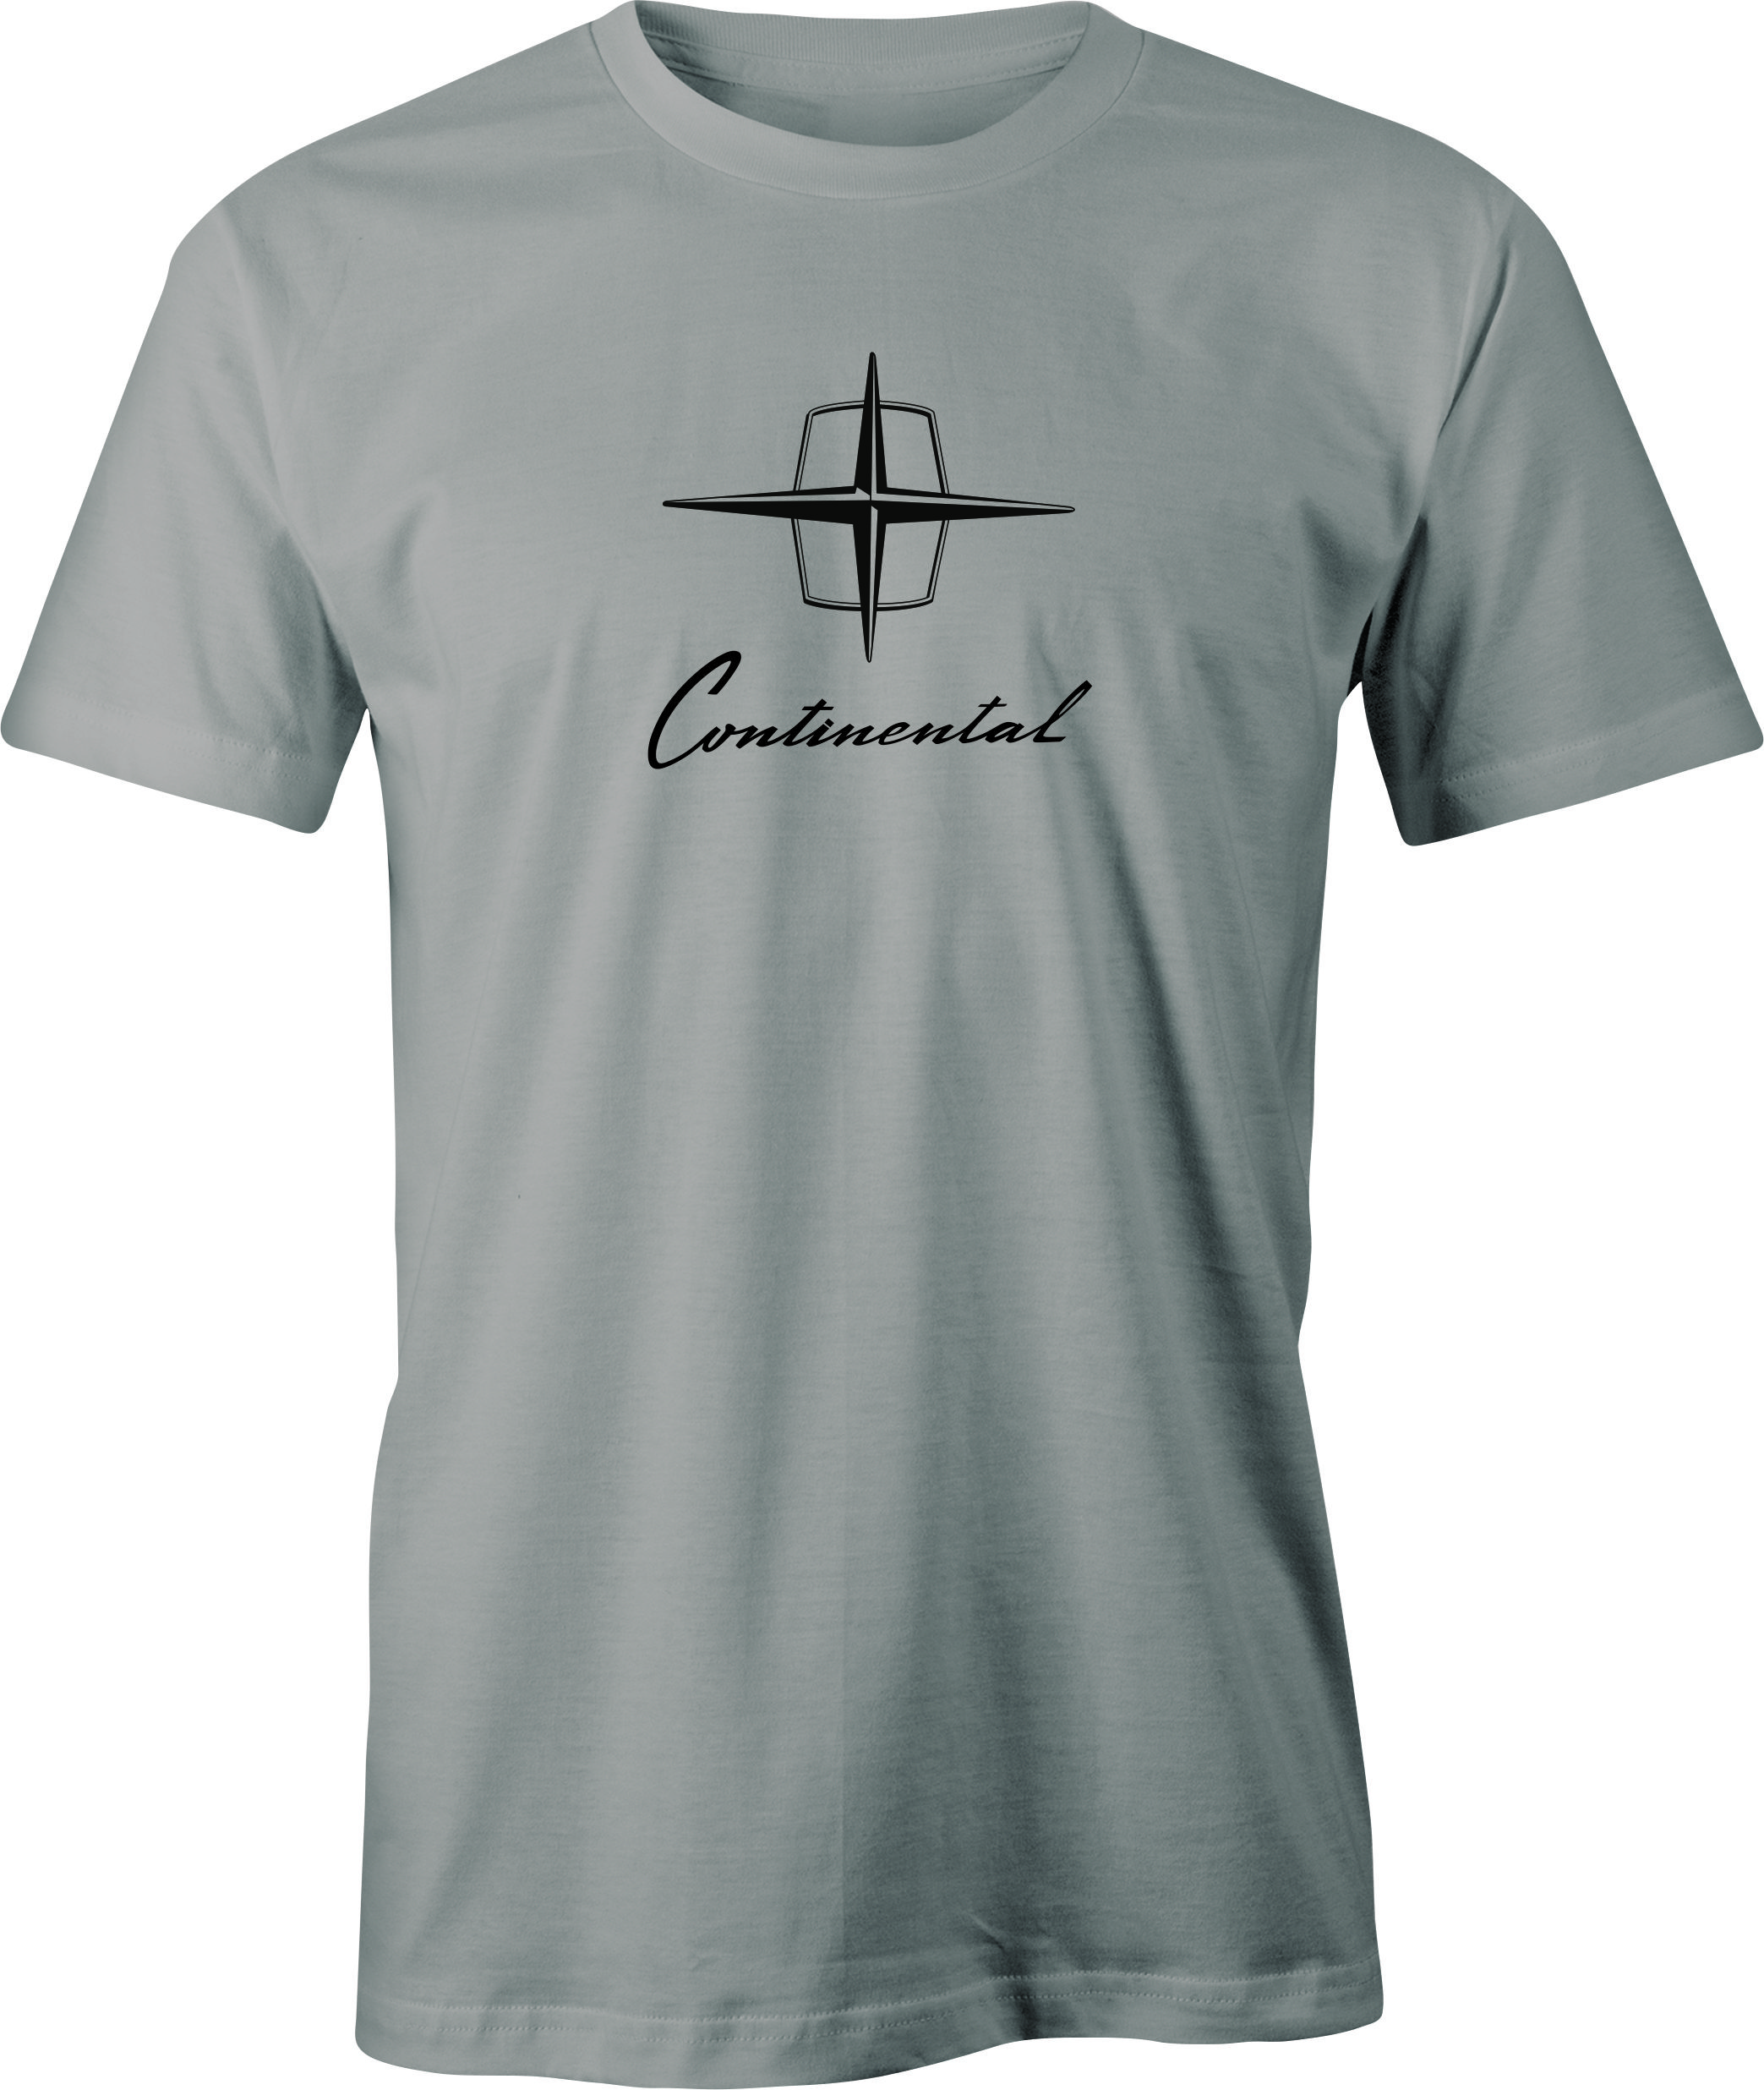 Continental Logo Black on Grey.jpg